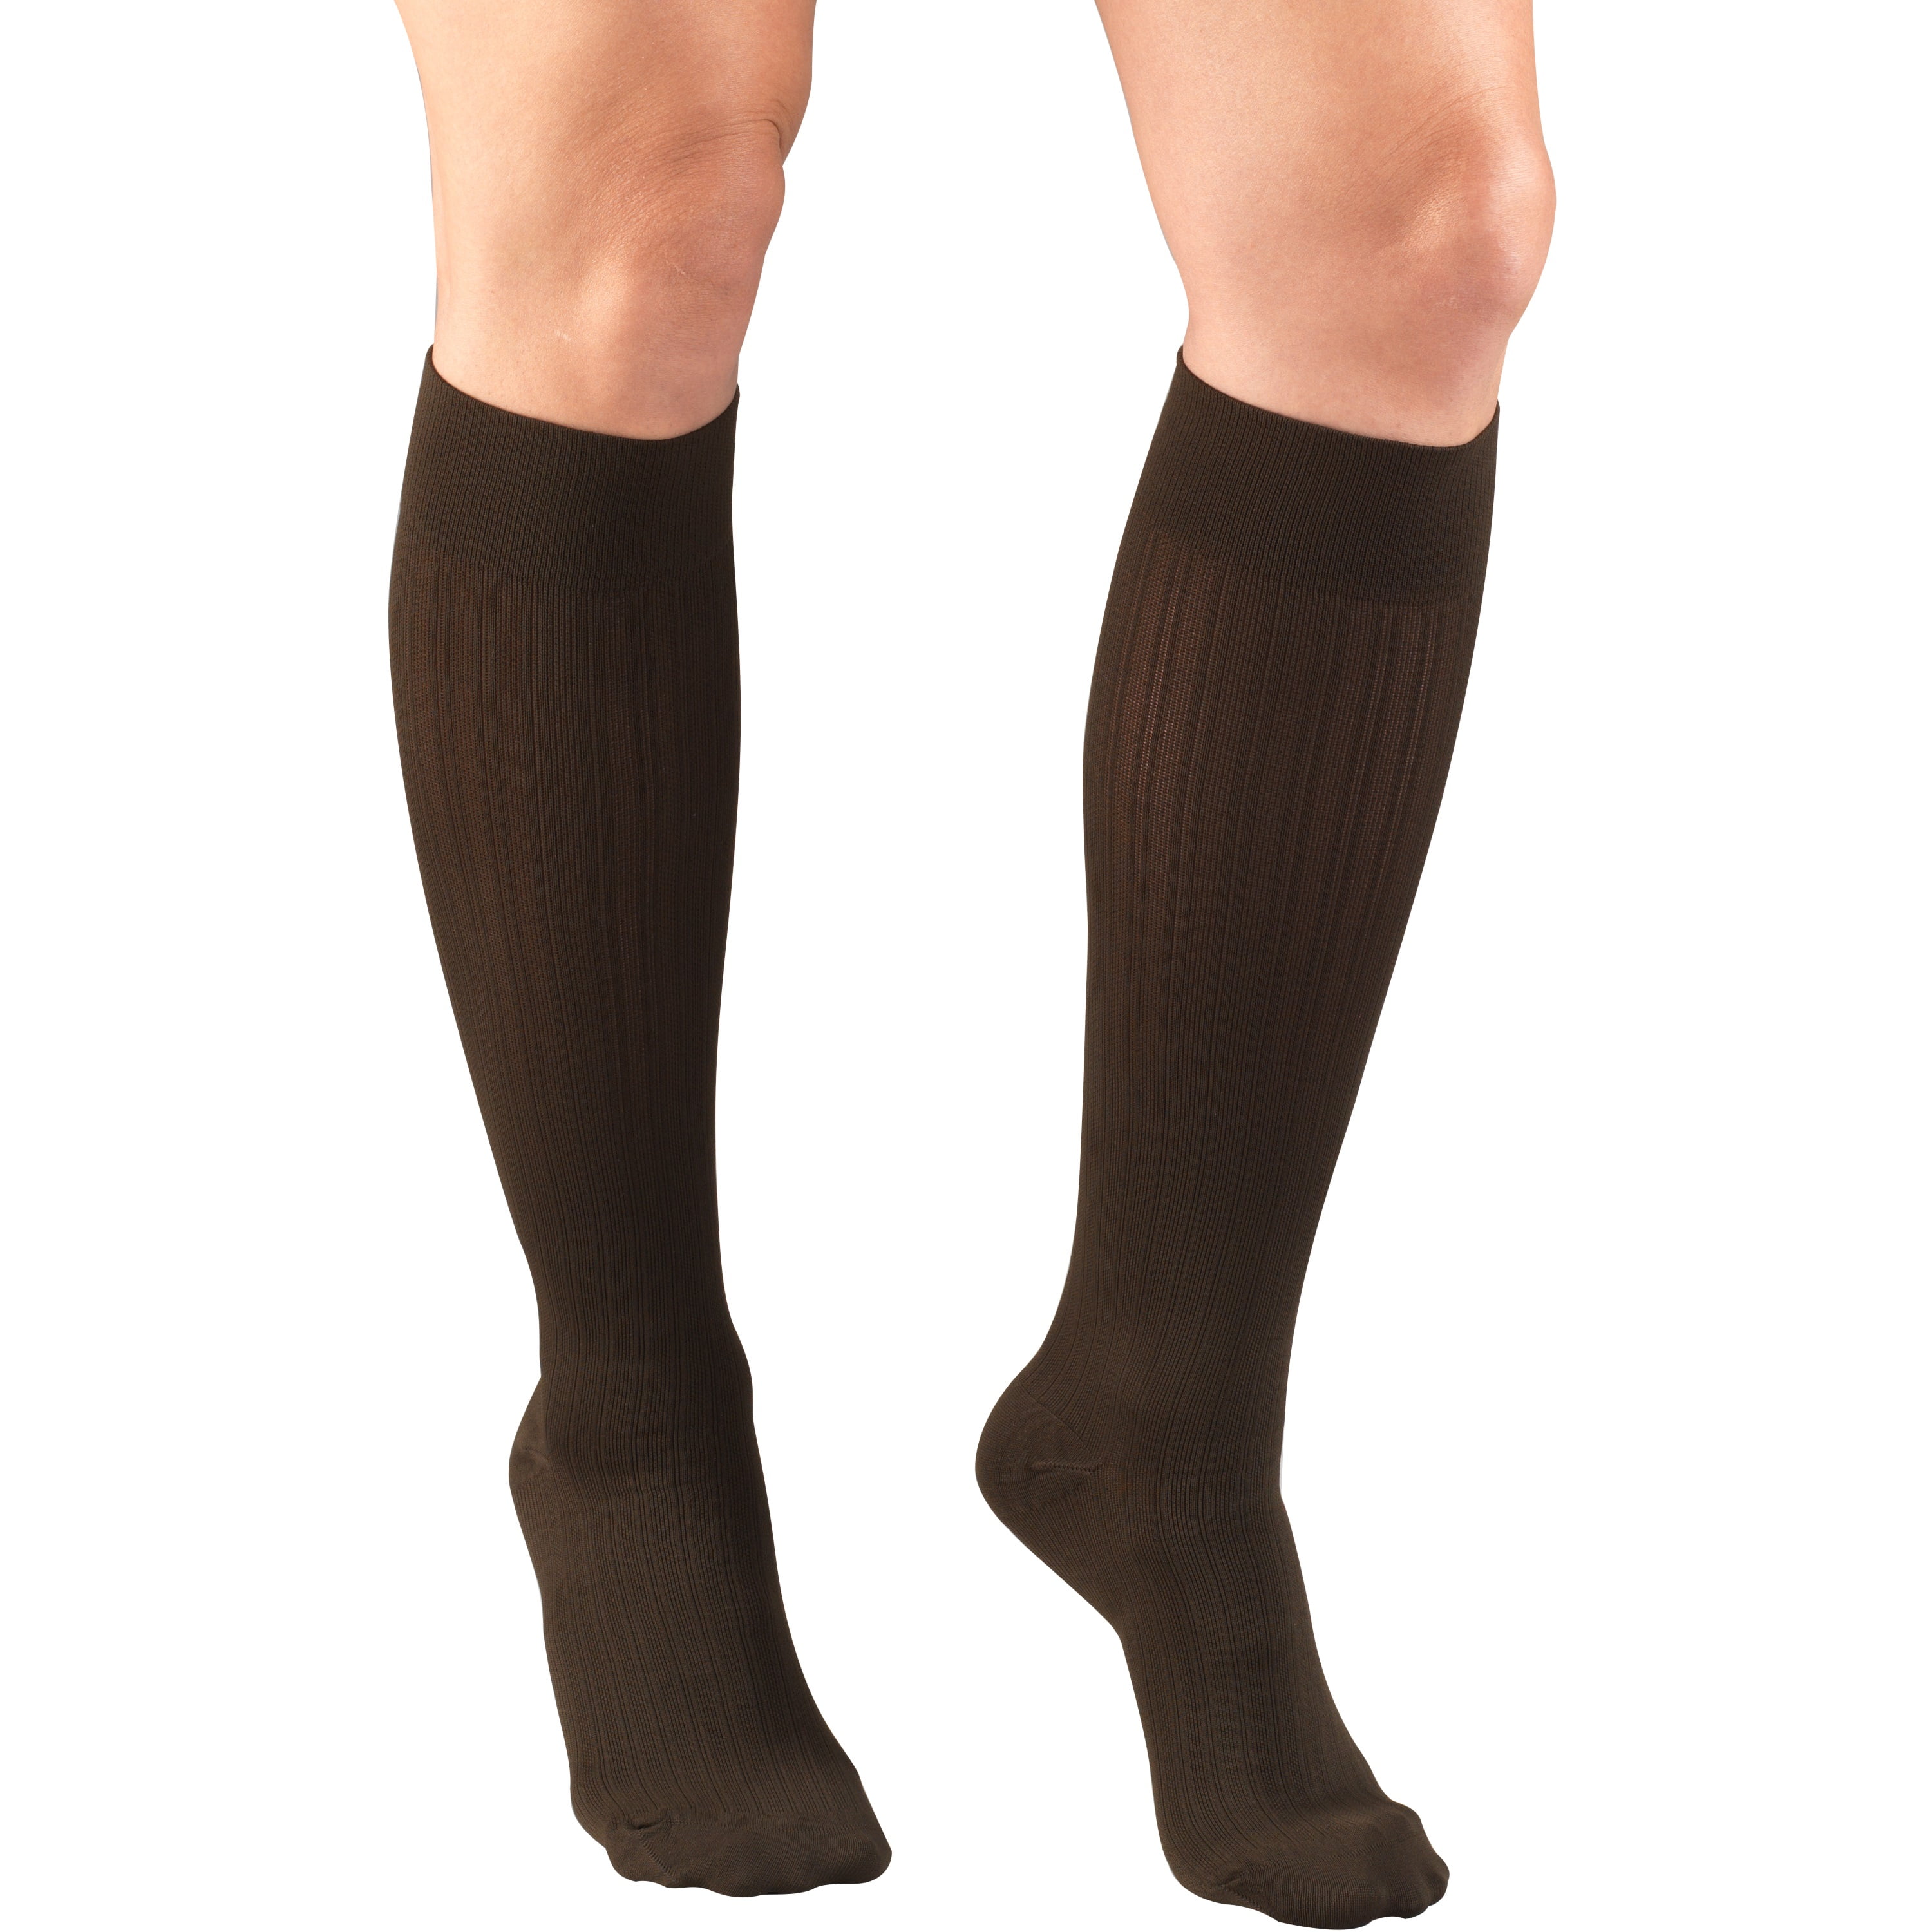 NuNu Womens Queen size 10-13 Trouser Socks 6 Brown / 6 Gray or 3 Gray &  3 Brown | eBay